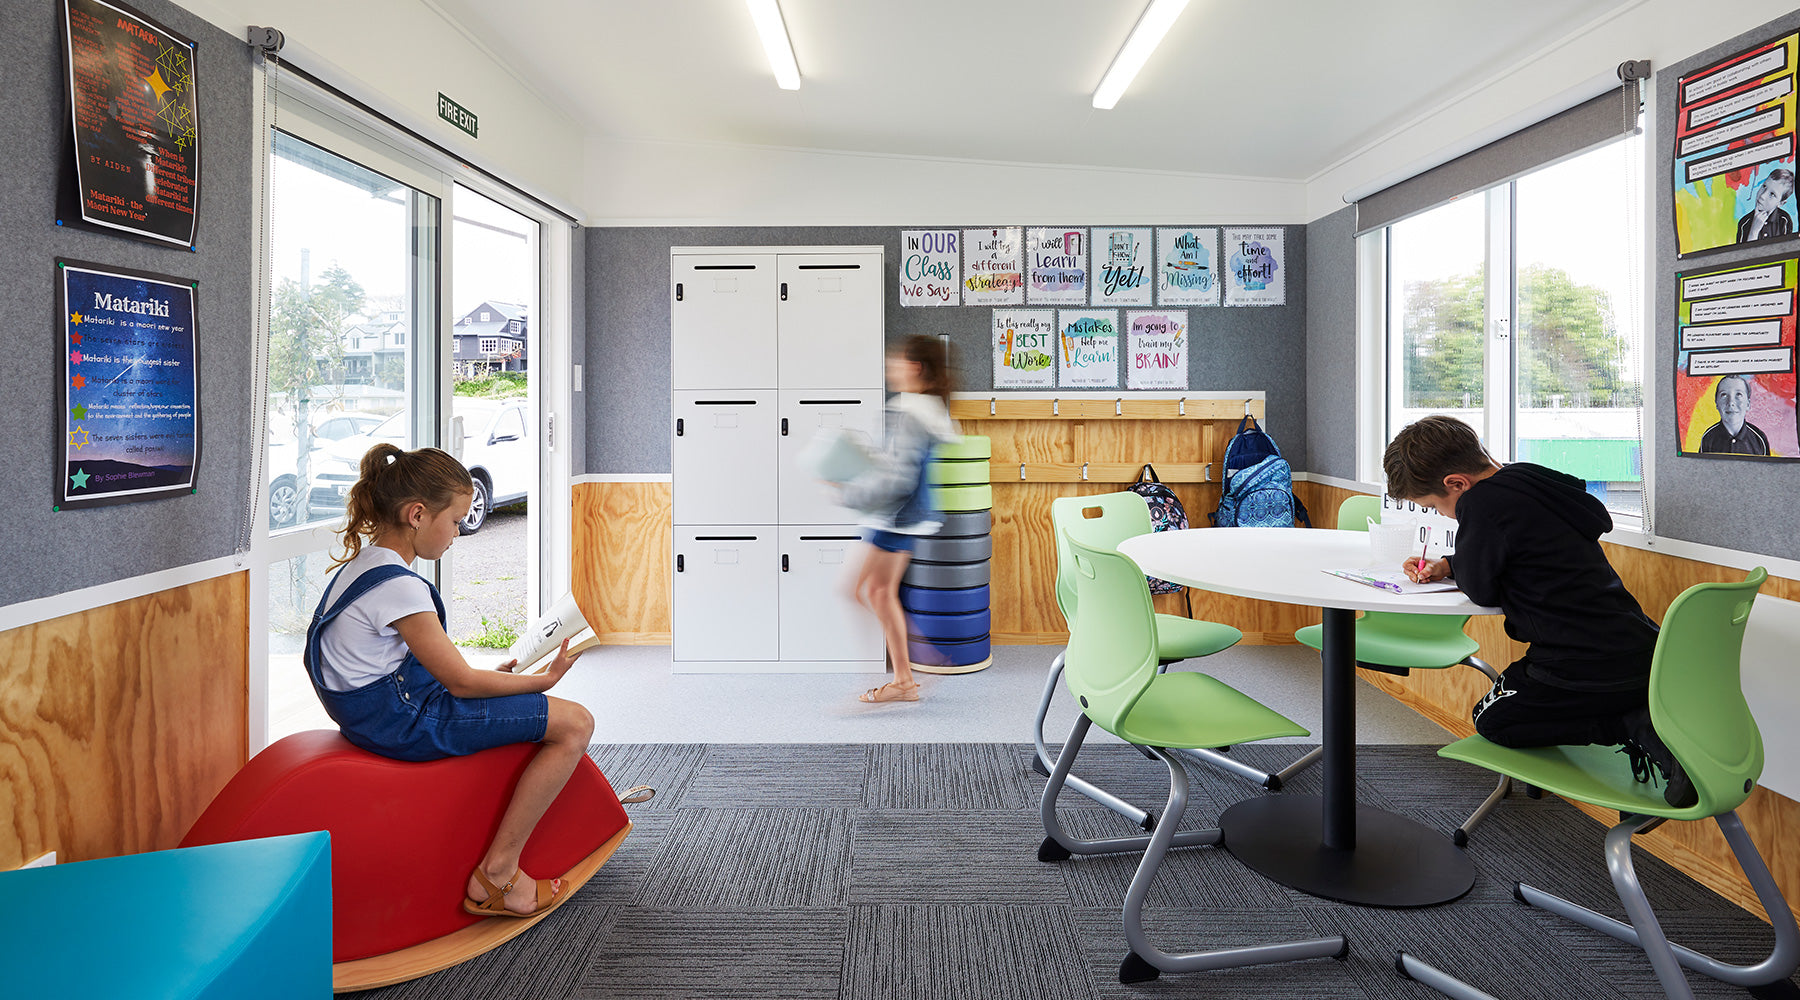 School Furniture Nz Classroom Chairs Desks Auckland Tauranga